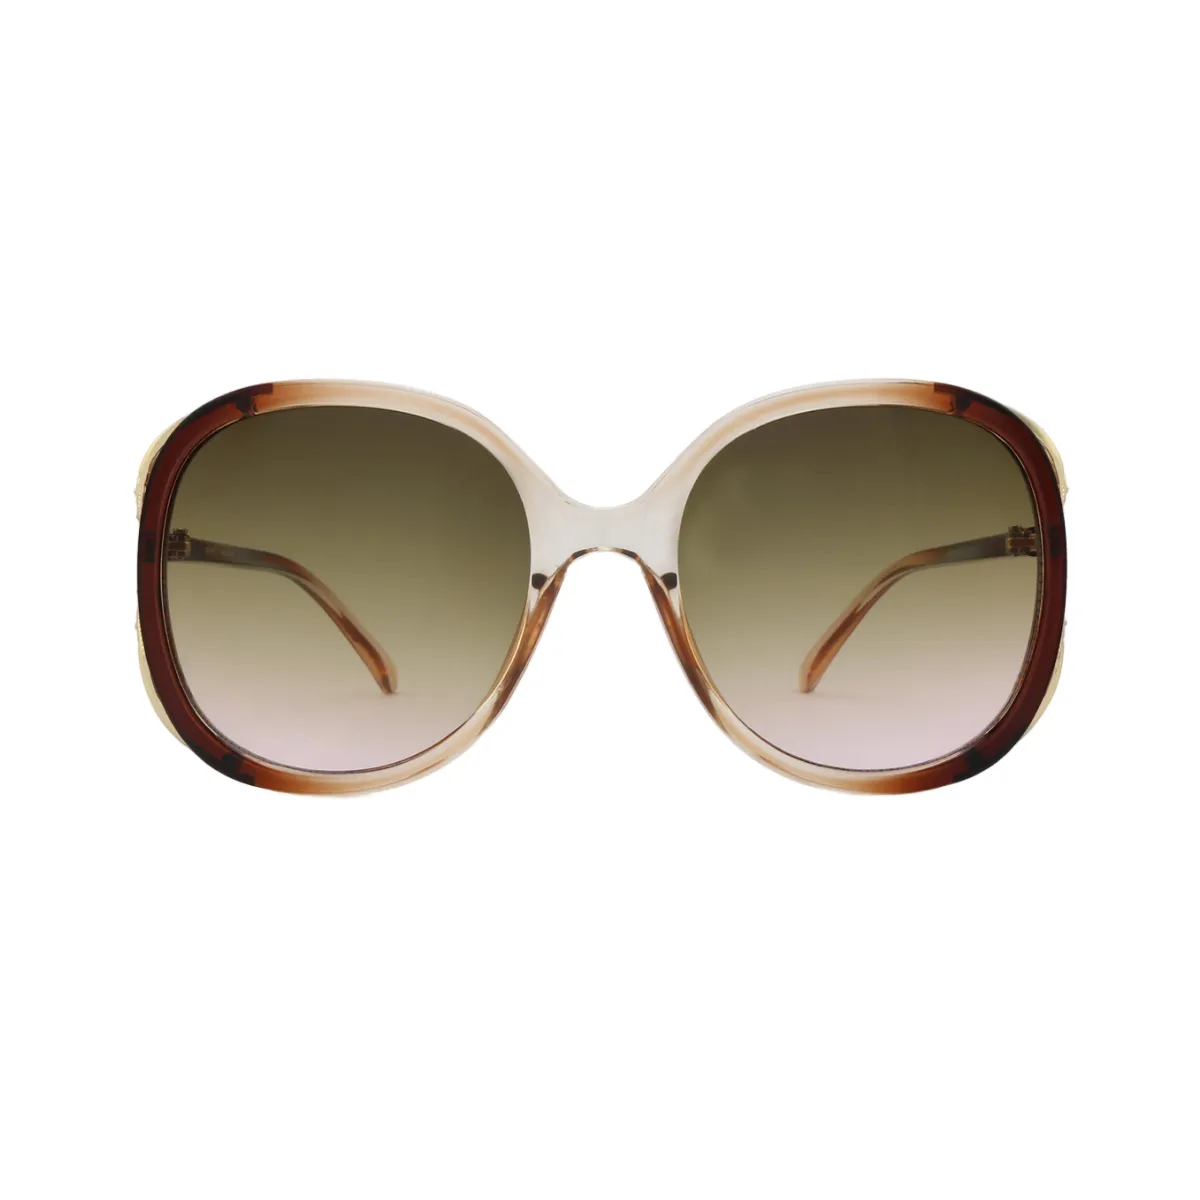 Rosie - Round Gold Sunglasses for Women